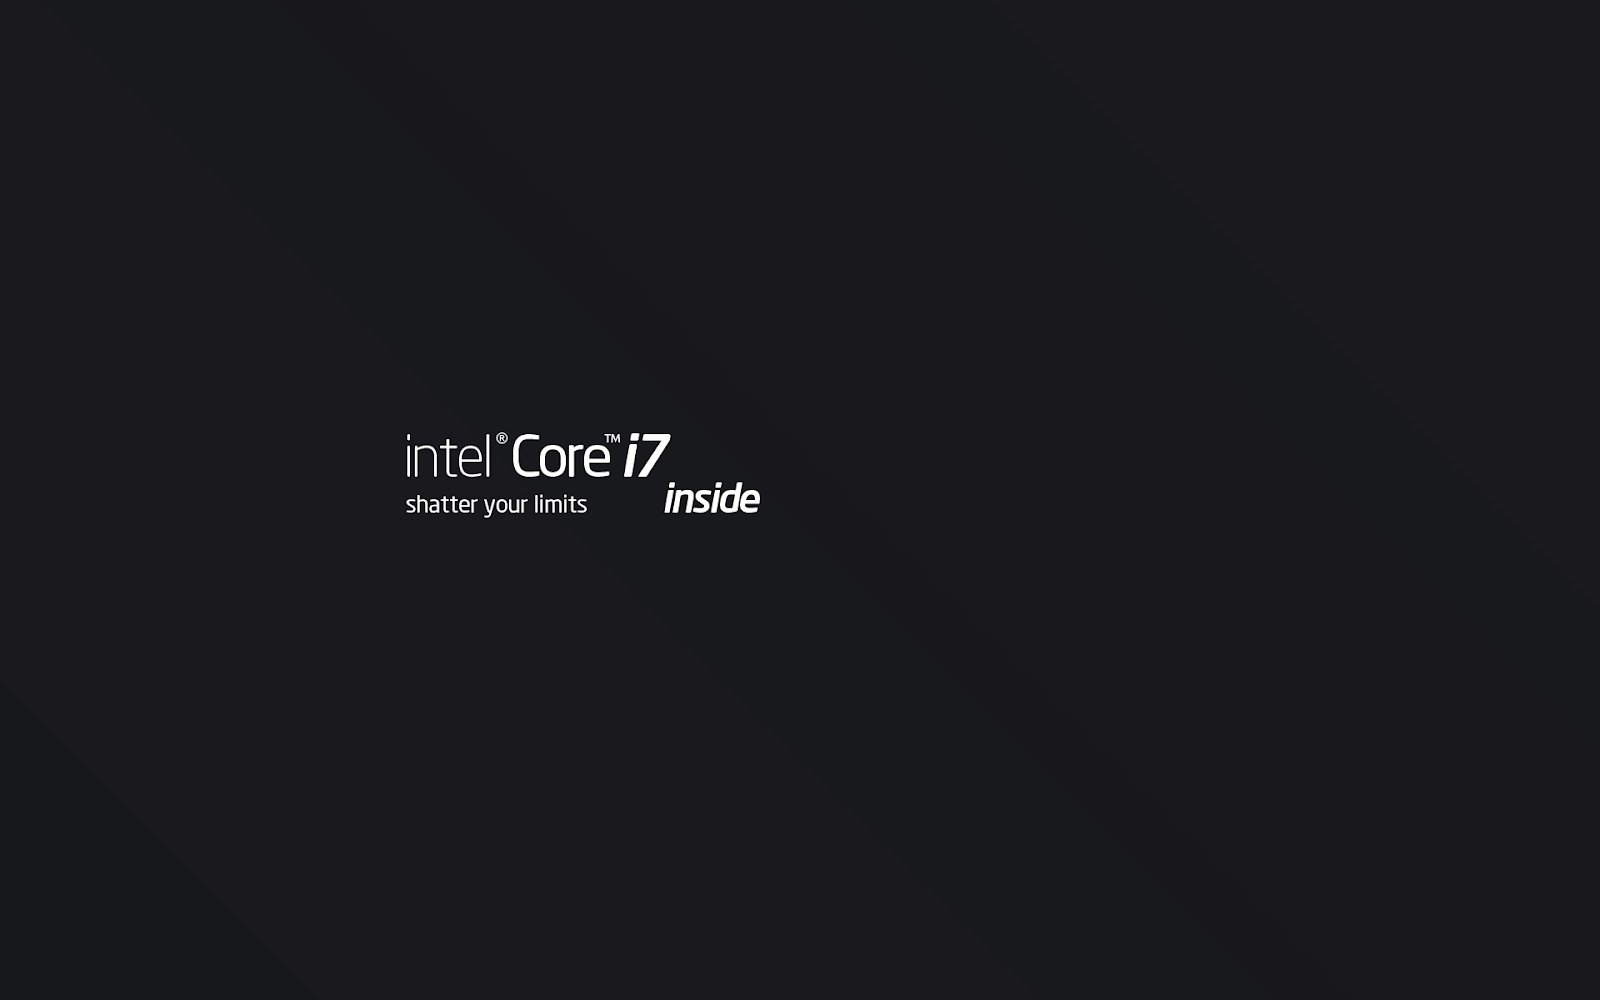 Intel Core i7 Wallpaper New Best Wallpapers 2011 indexwallpaper